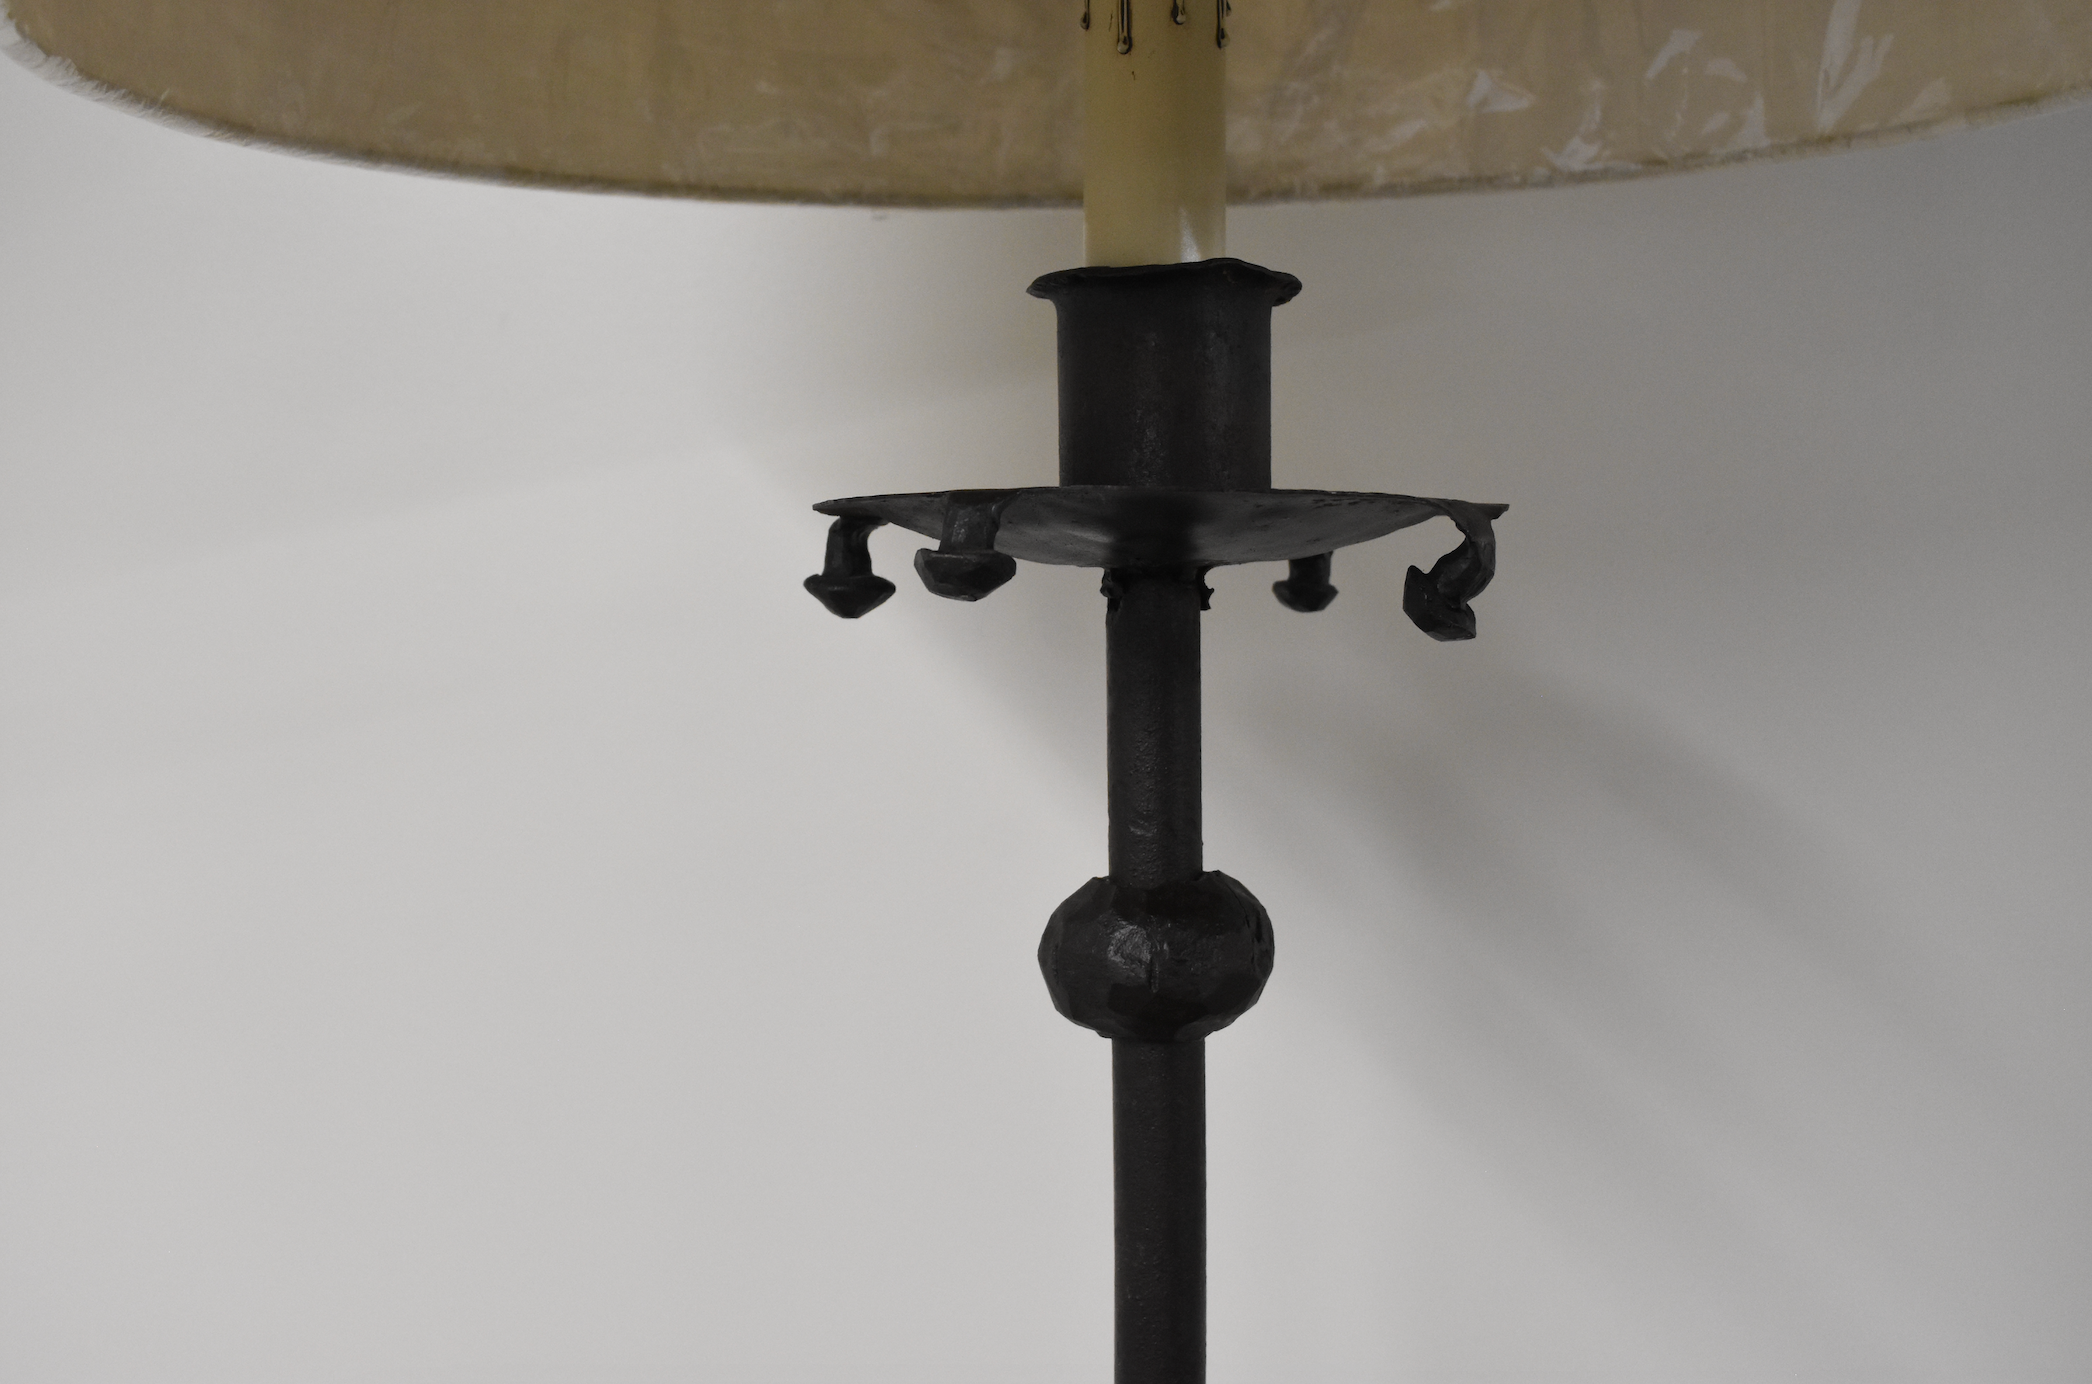 Antique Wrought Iron Floor Lamp with Sphere Design